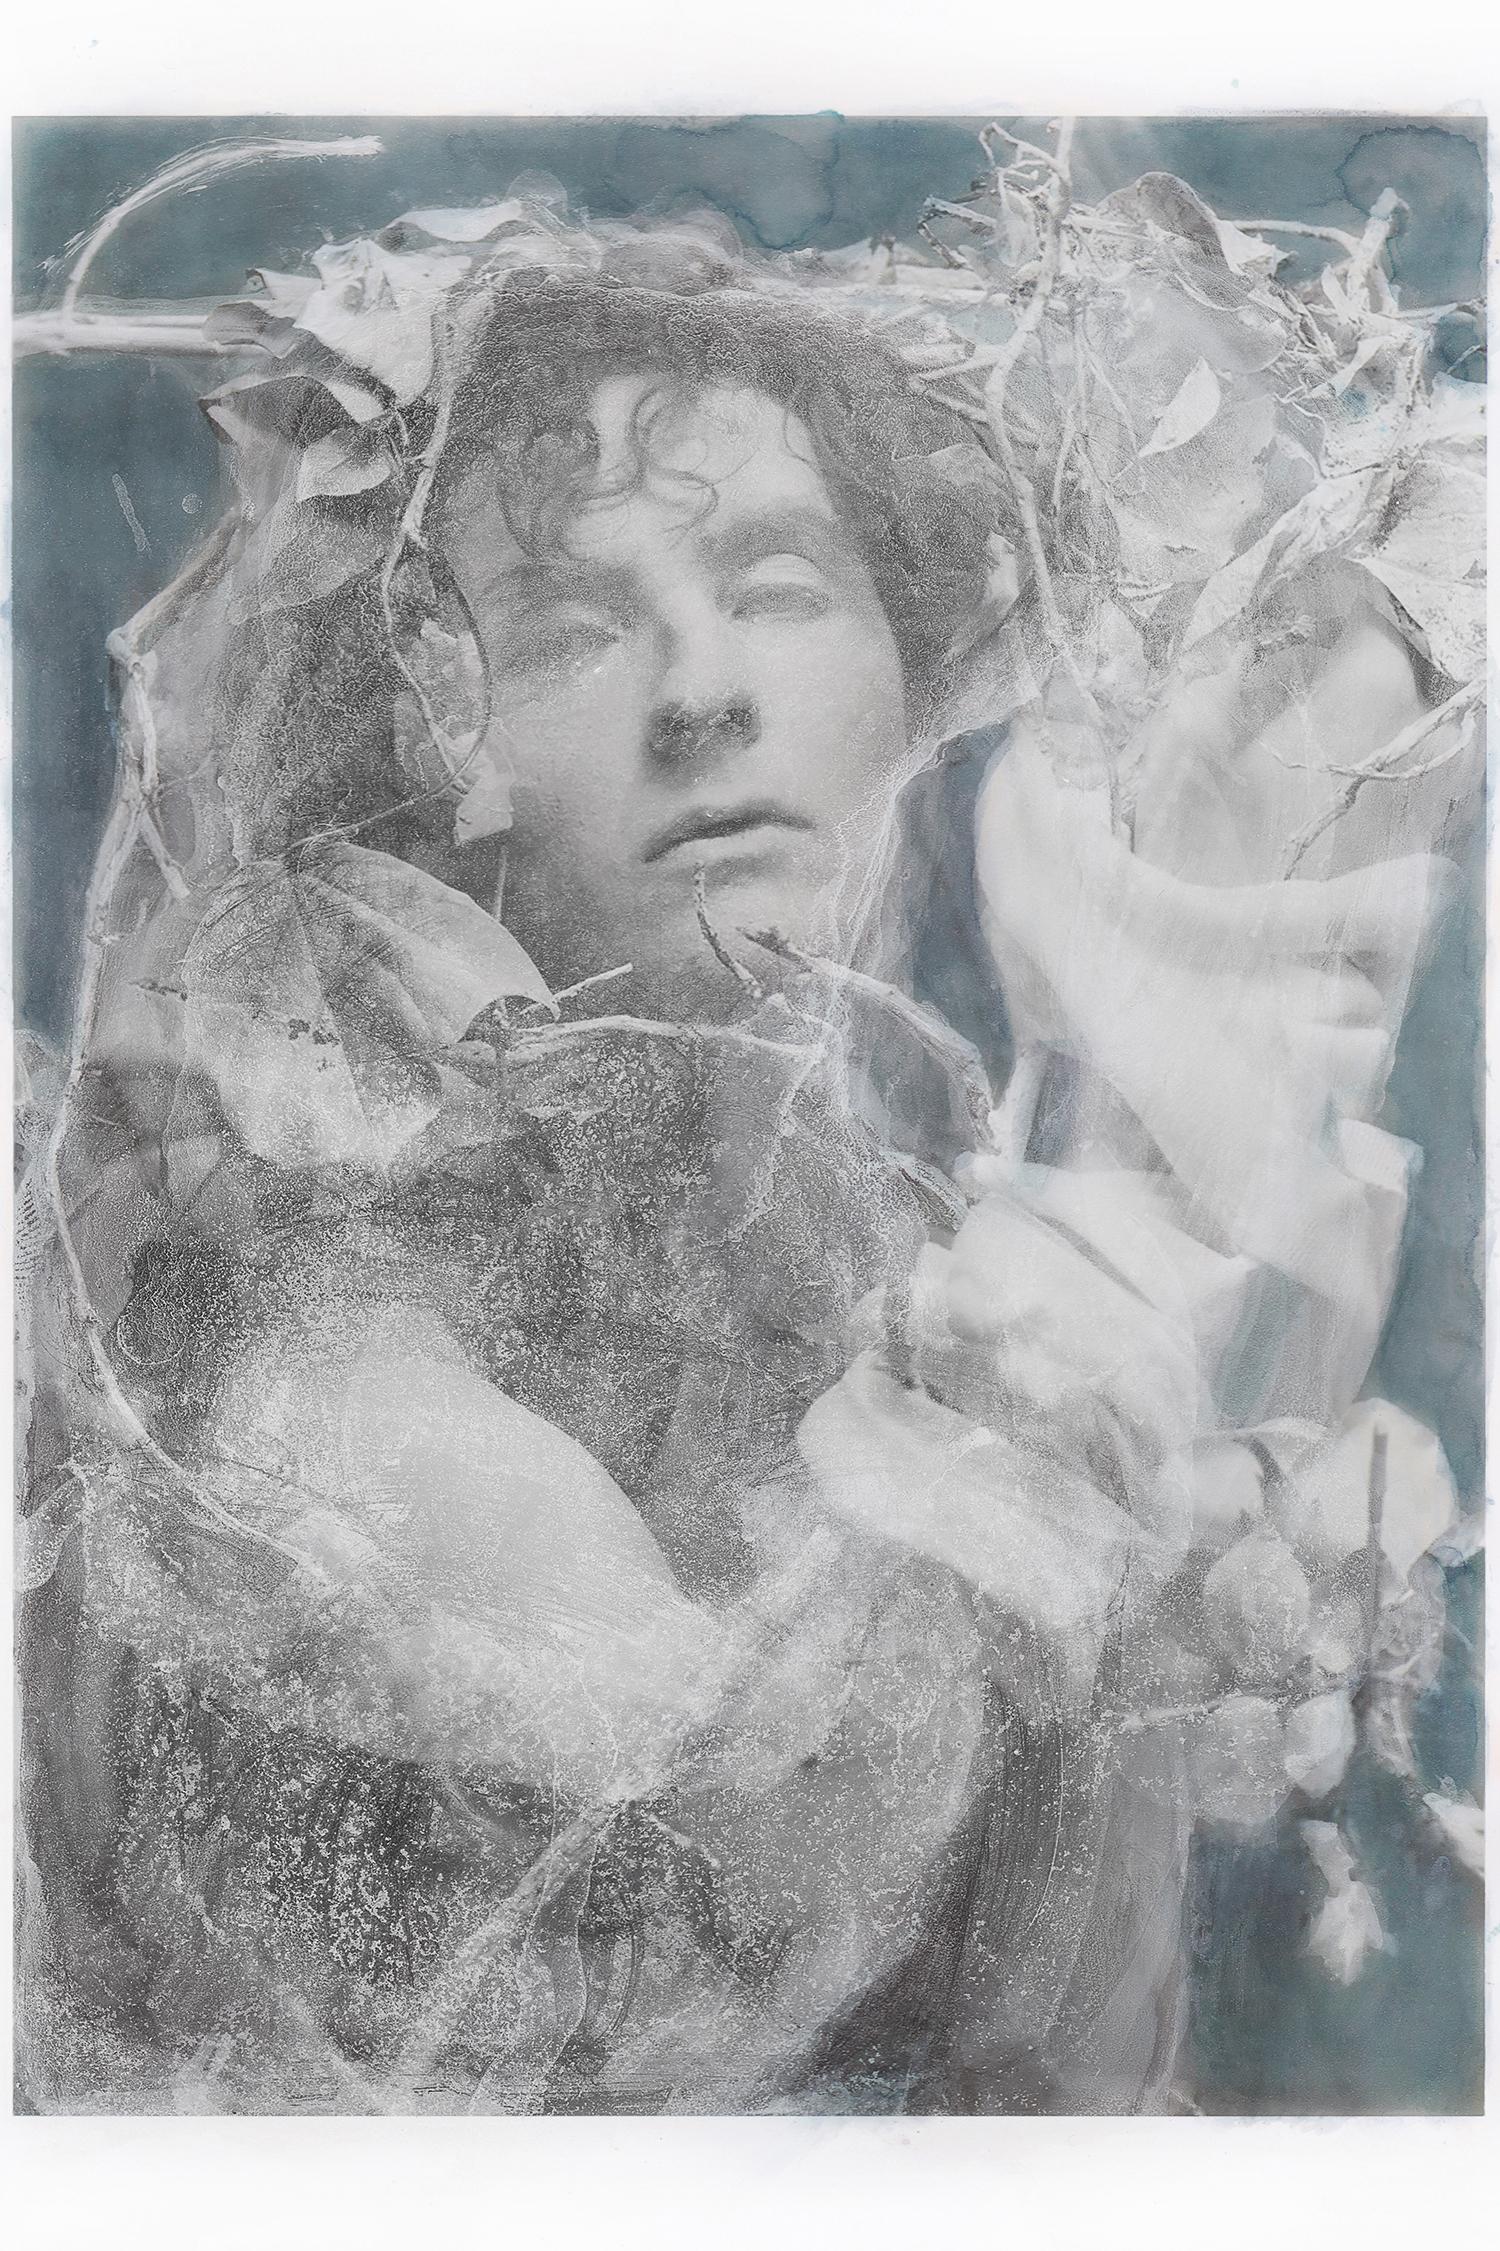 Katie Eleanor Portrait Photograph - Blue grey watercolour Print of Male as Daphne with Flowers as Marble Sculpture